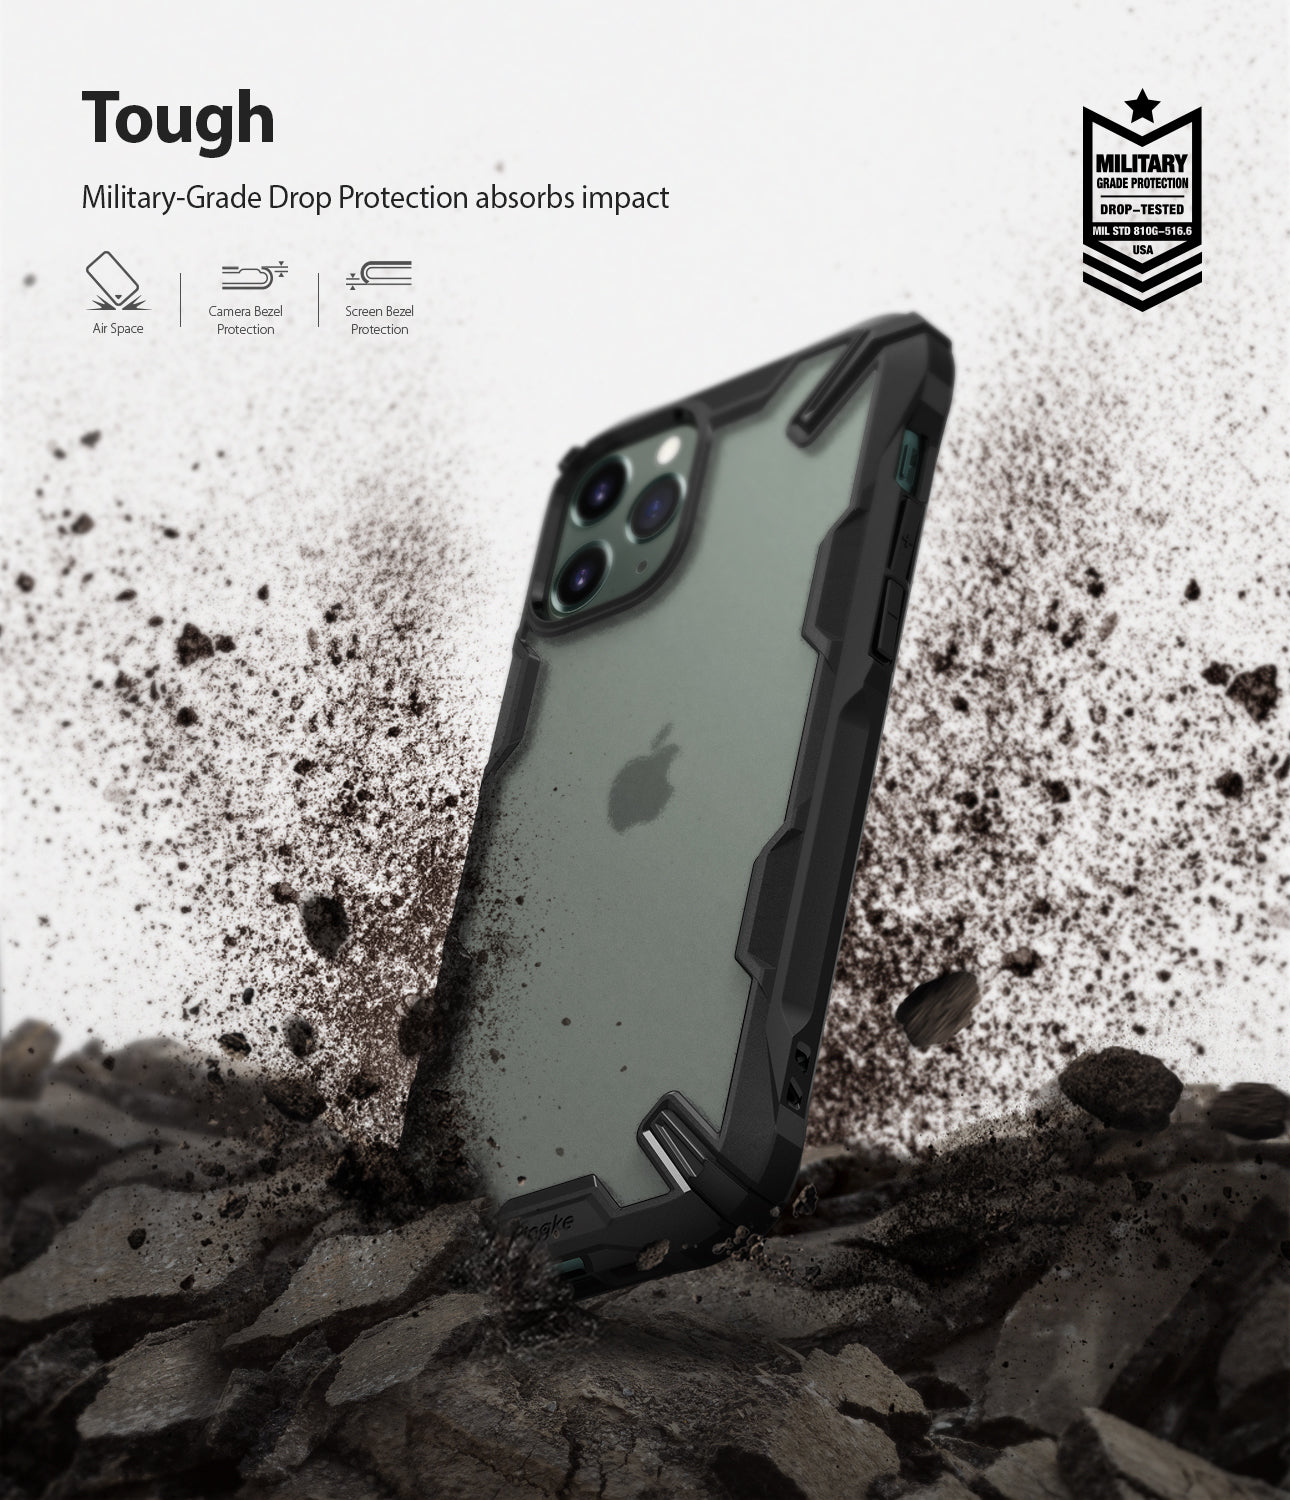 Ringke Fusion-X Matte Designed Case for iPhone 11 Pro Matte Dark Green military grade drop protection